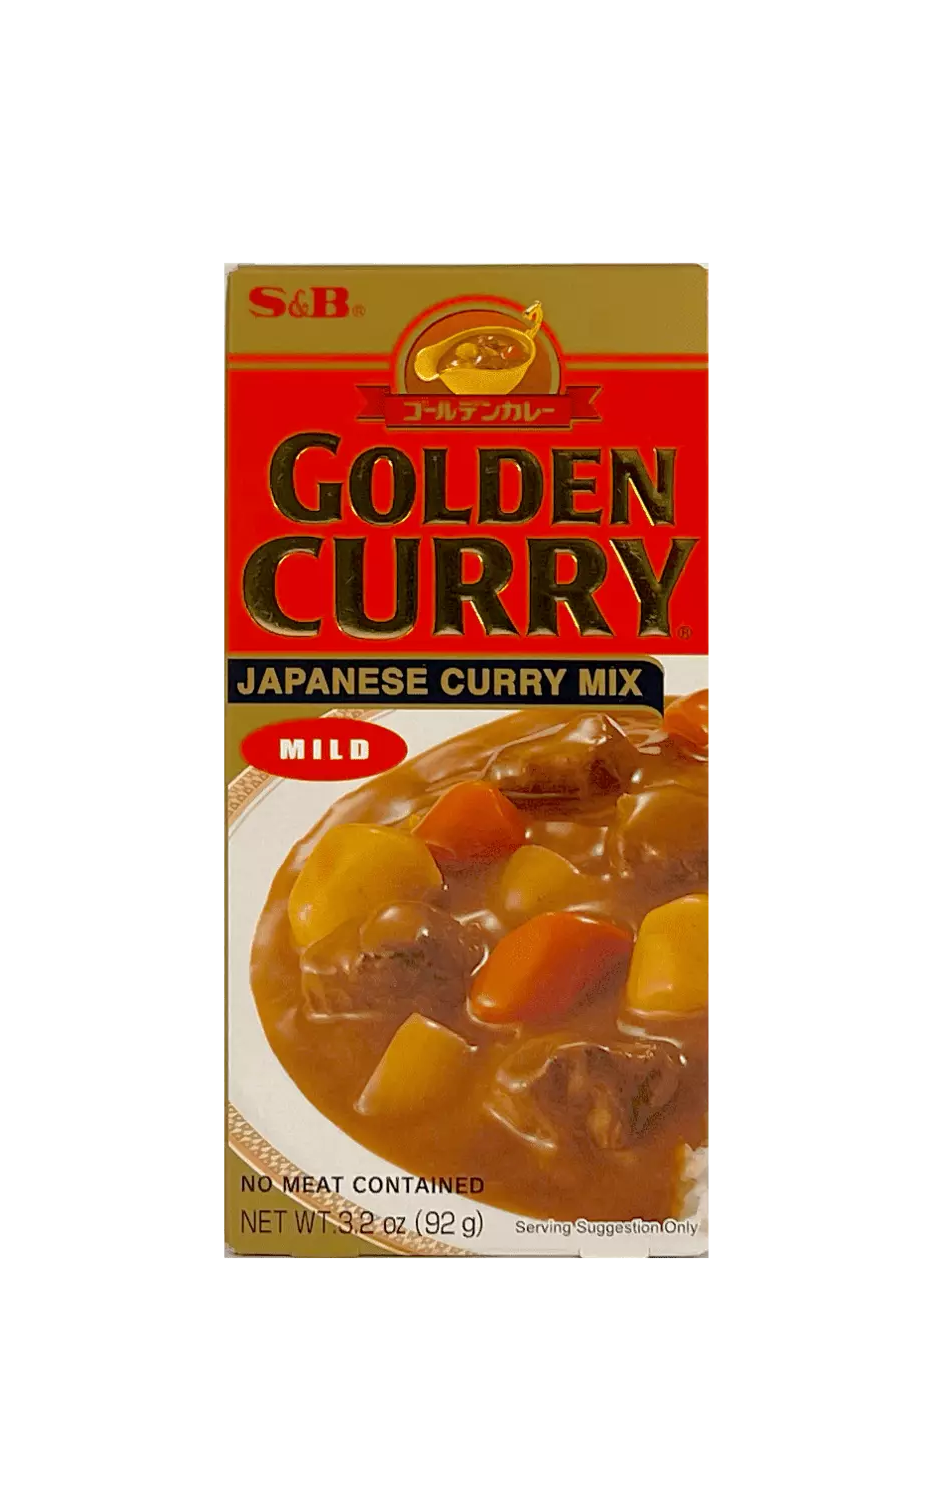 Golden Curry Mild 92g S&B Japan